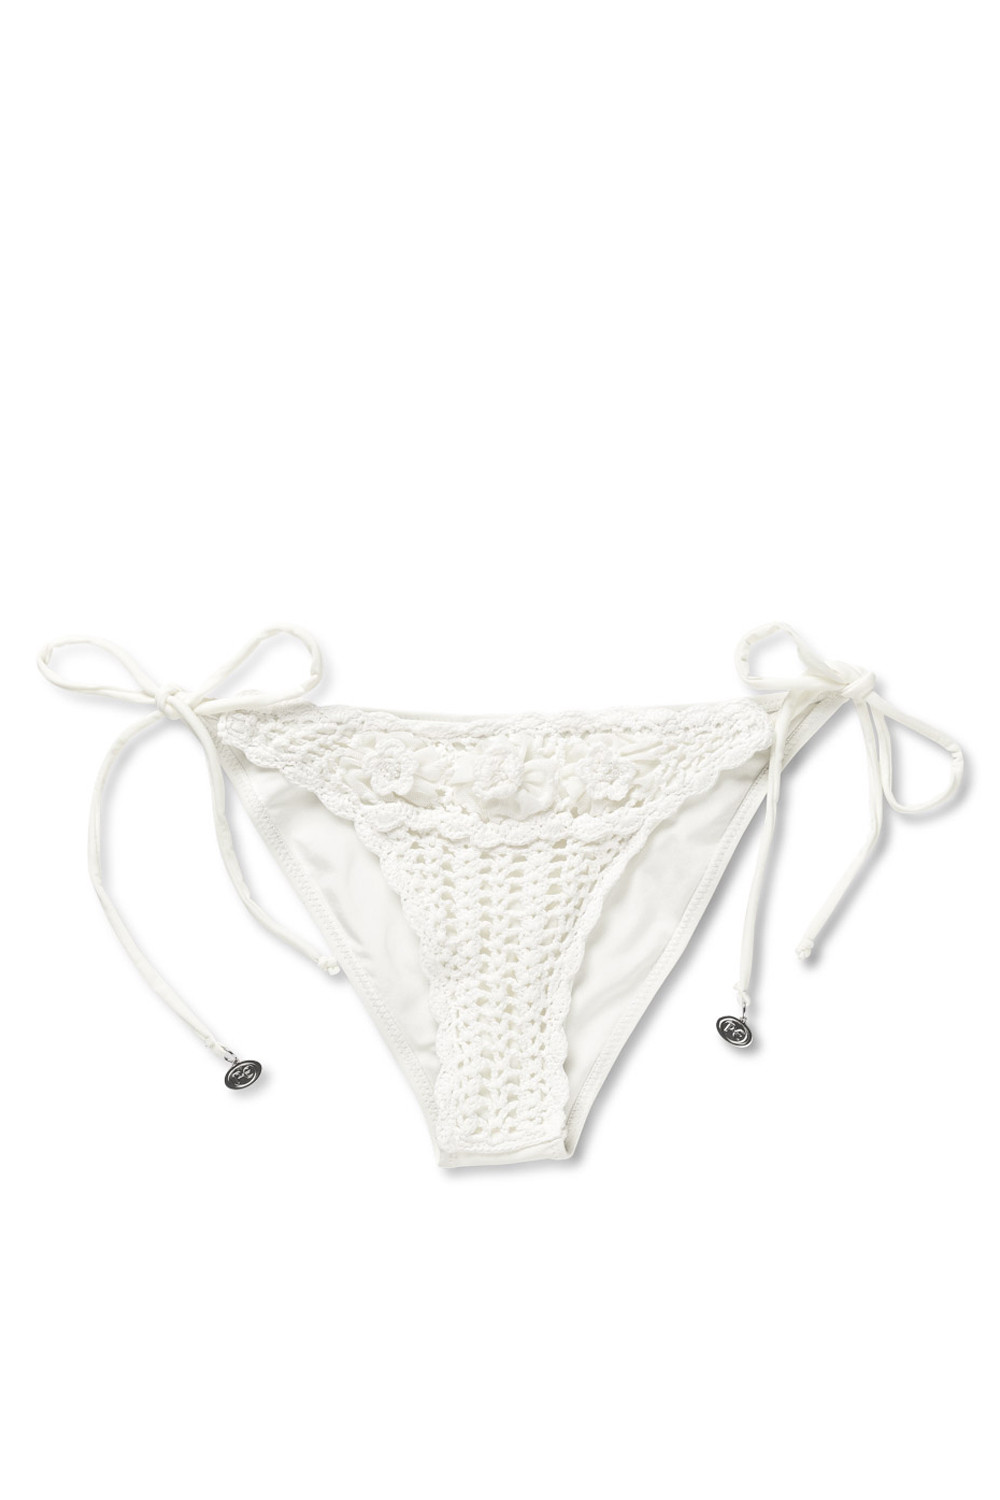 Panos Emporio Kandia Crochet Bikini Wit Bottom Large